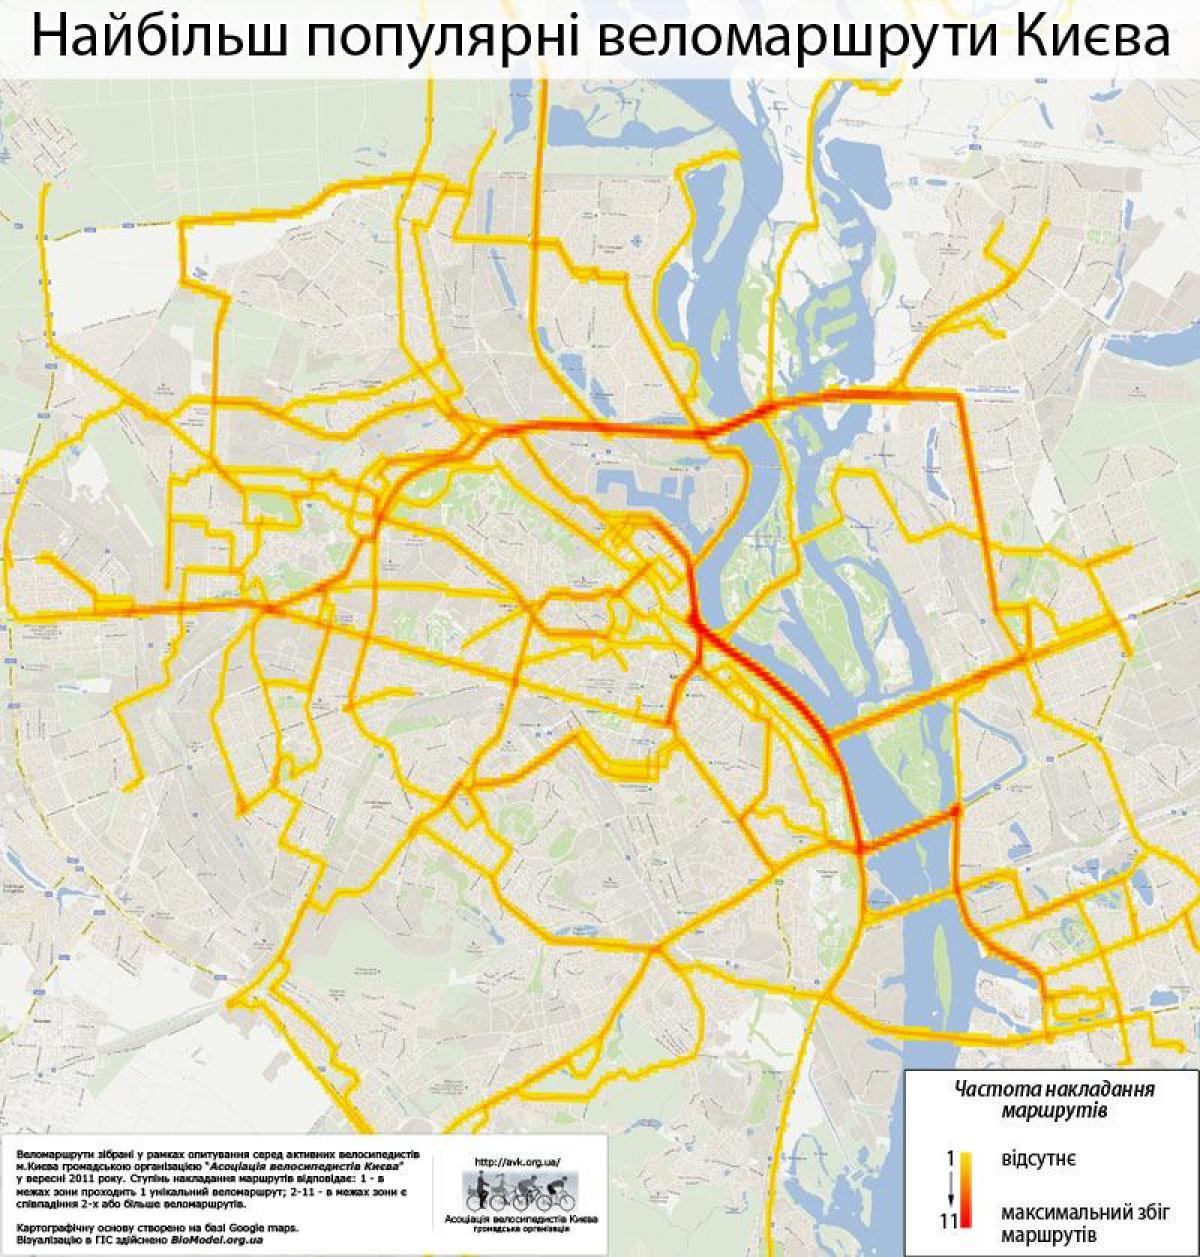 Kiev fietspad kaart